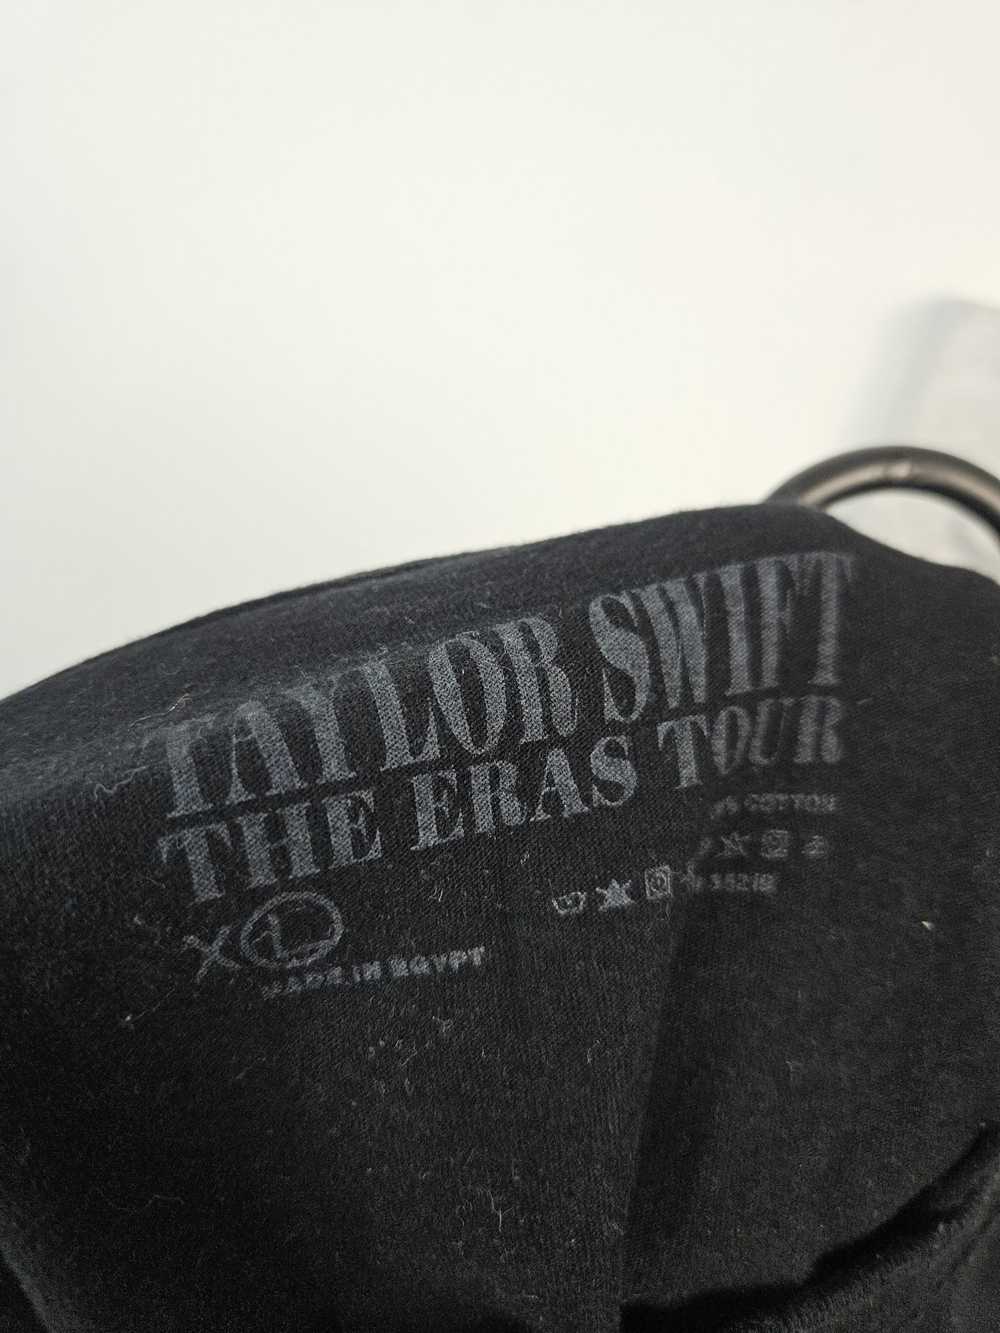 Band Tees Taylor Swift shirt The Eras Tour - image 6